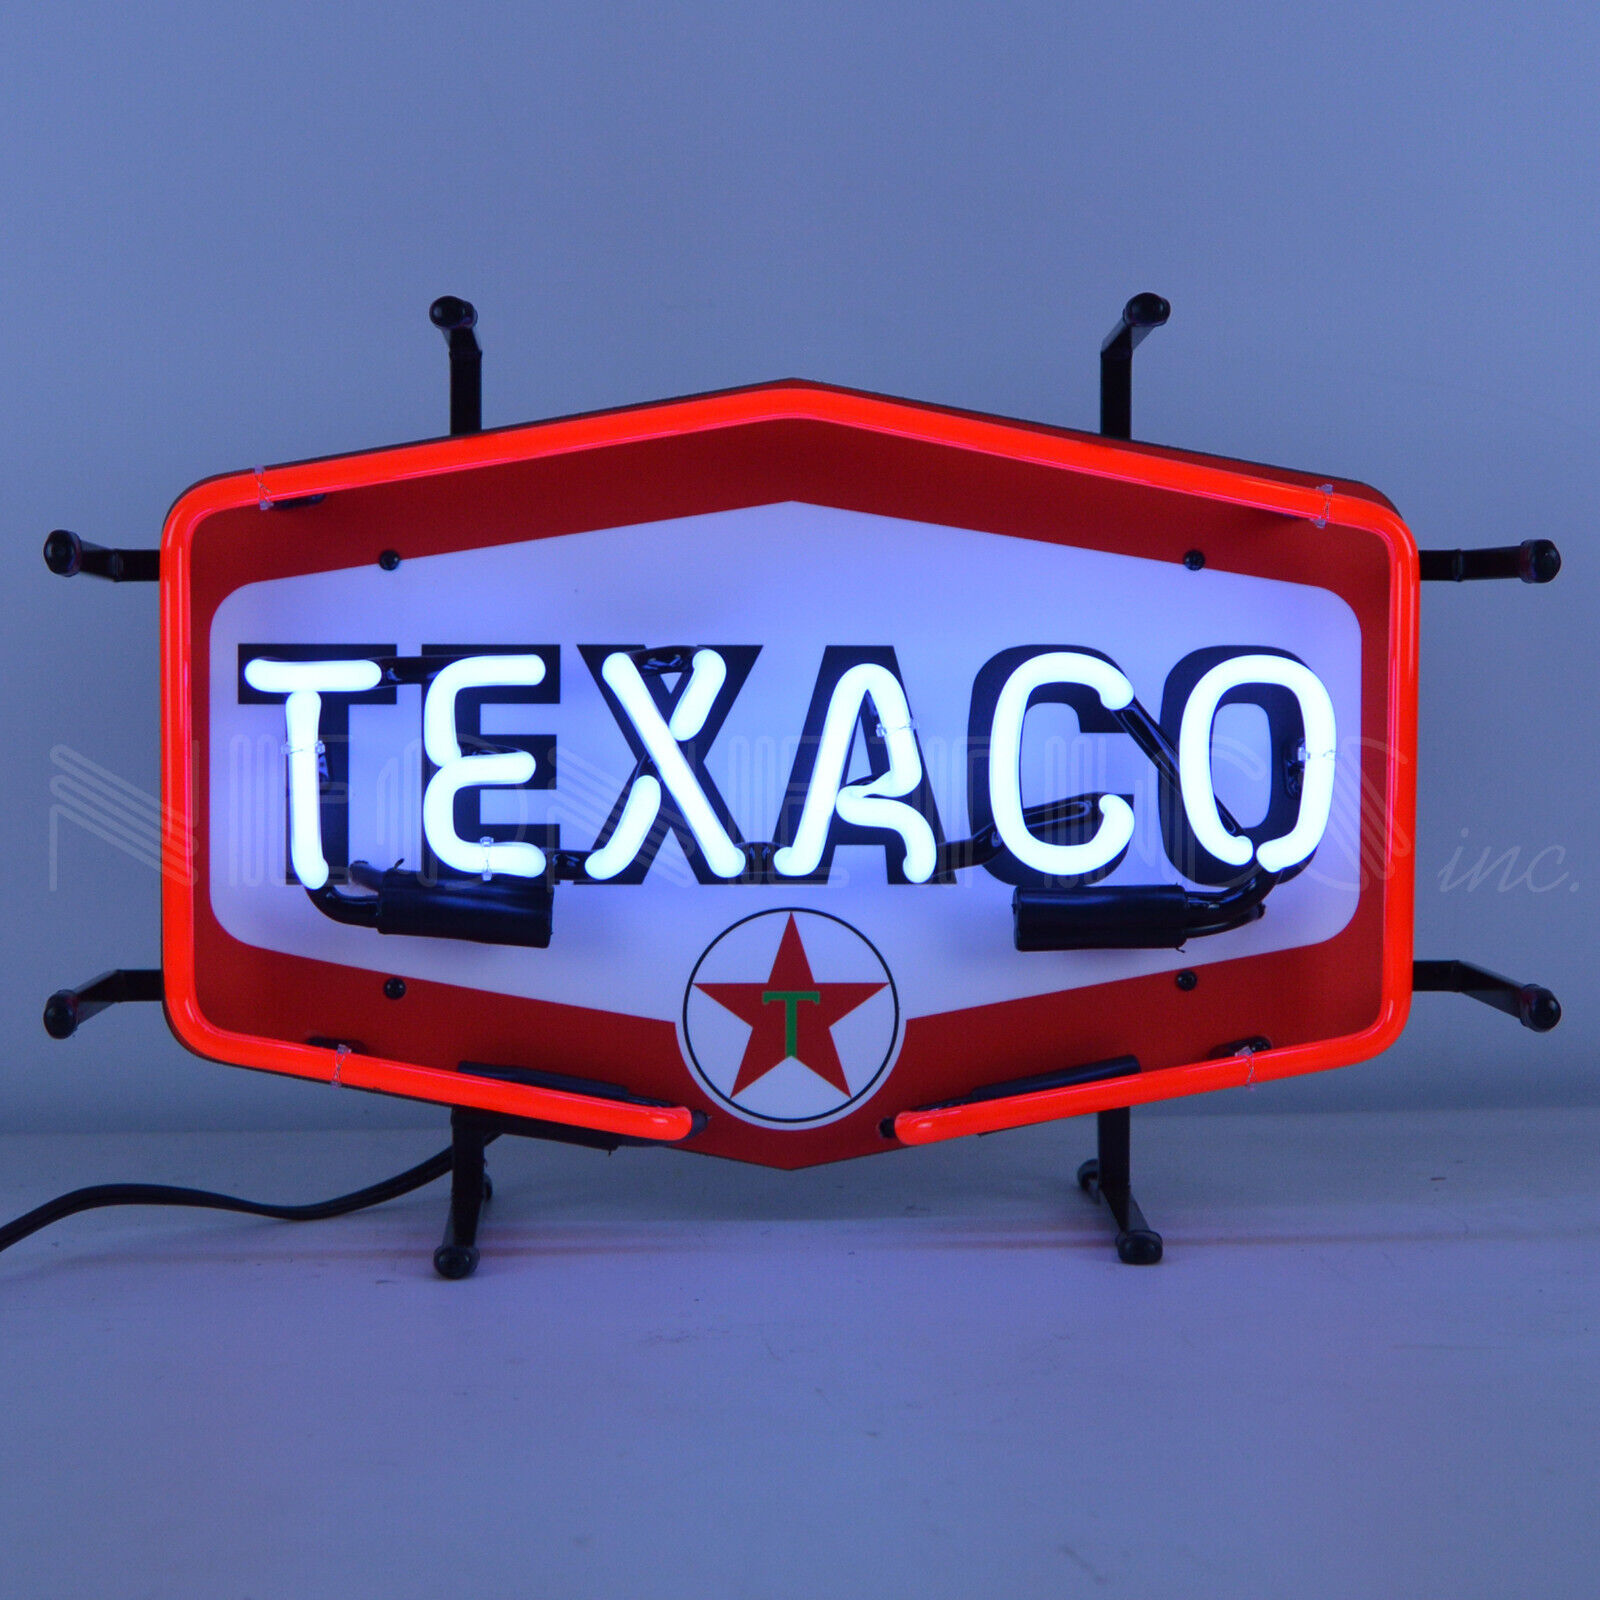 Texaco Star Neon Sign Gas and Oil Dads Garage Wall lamp light Hexagon pump globe